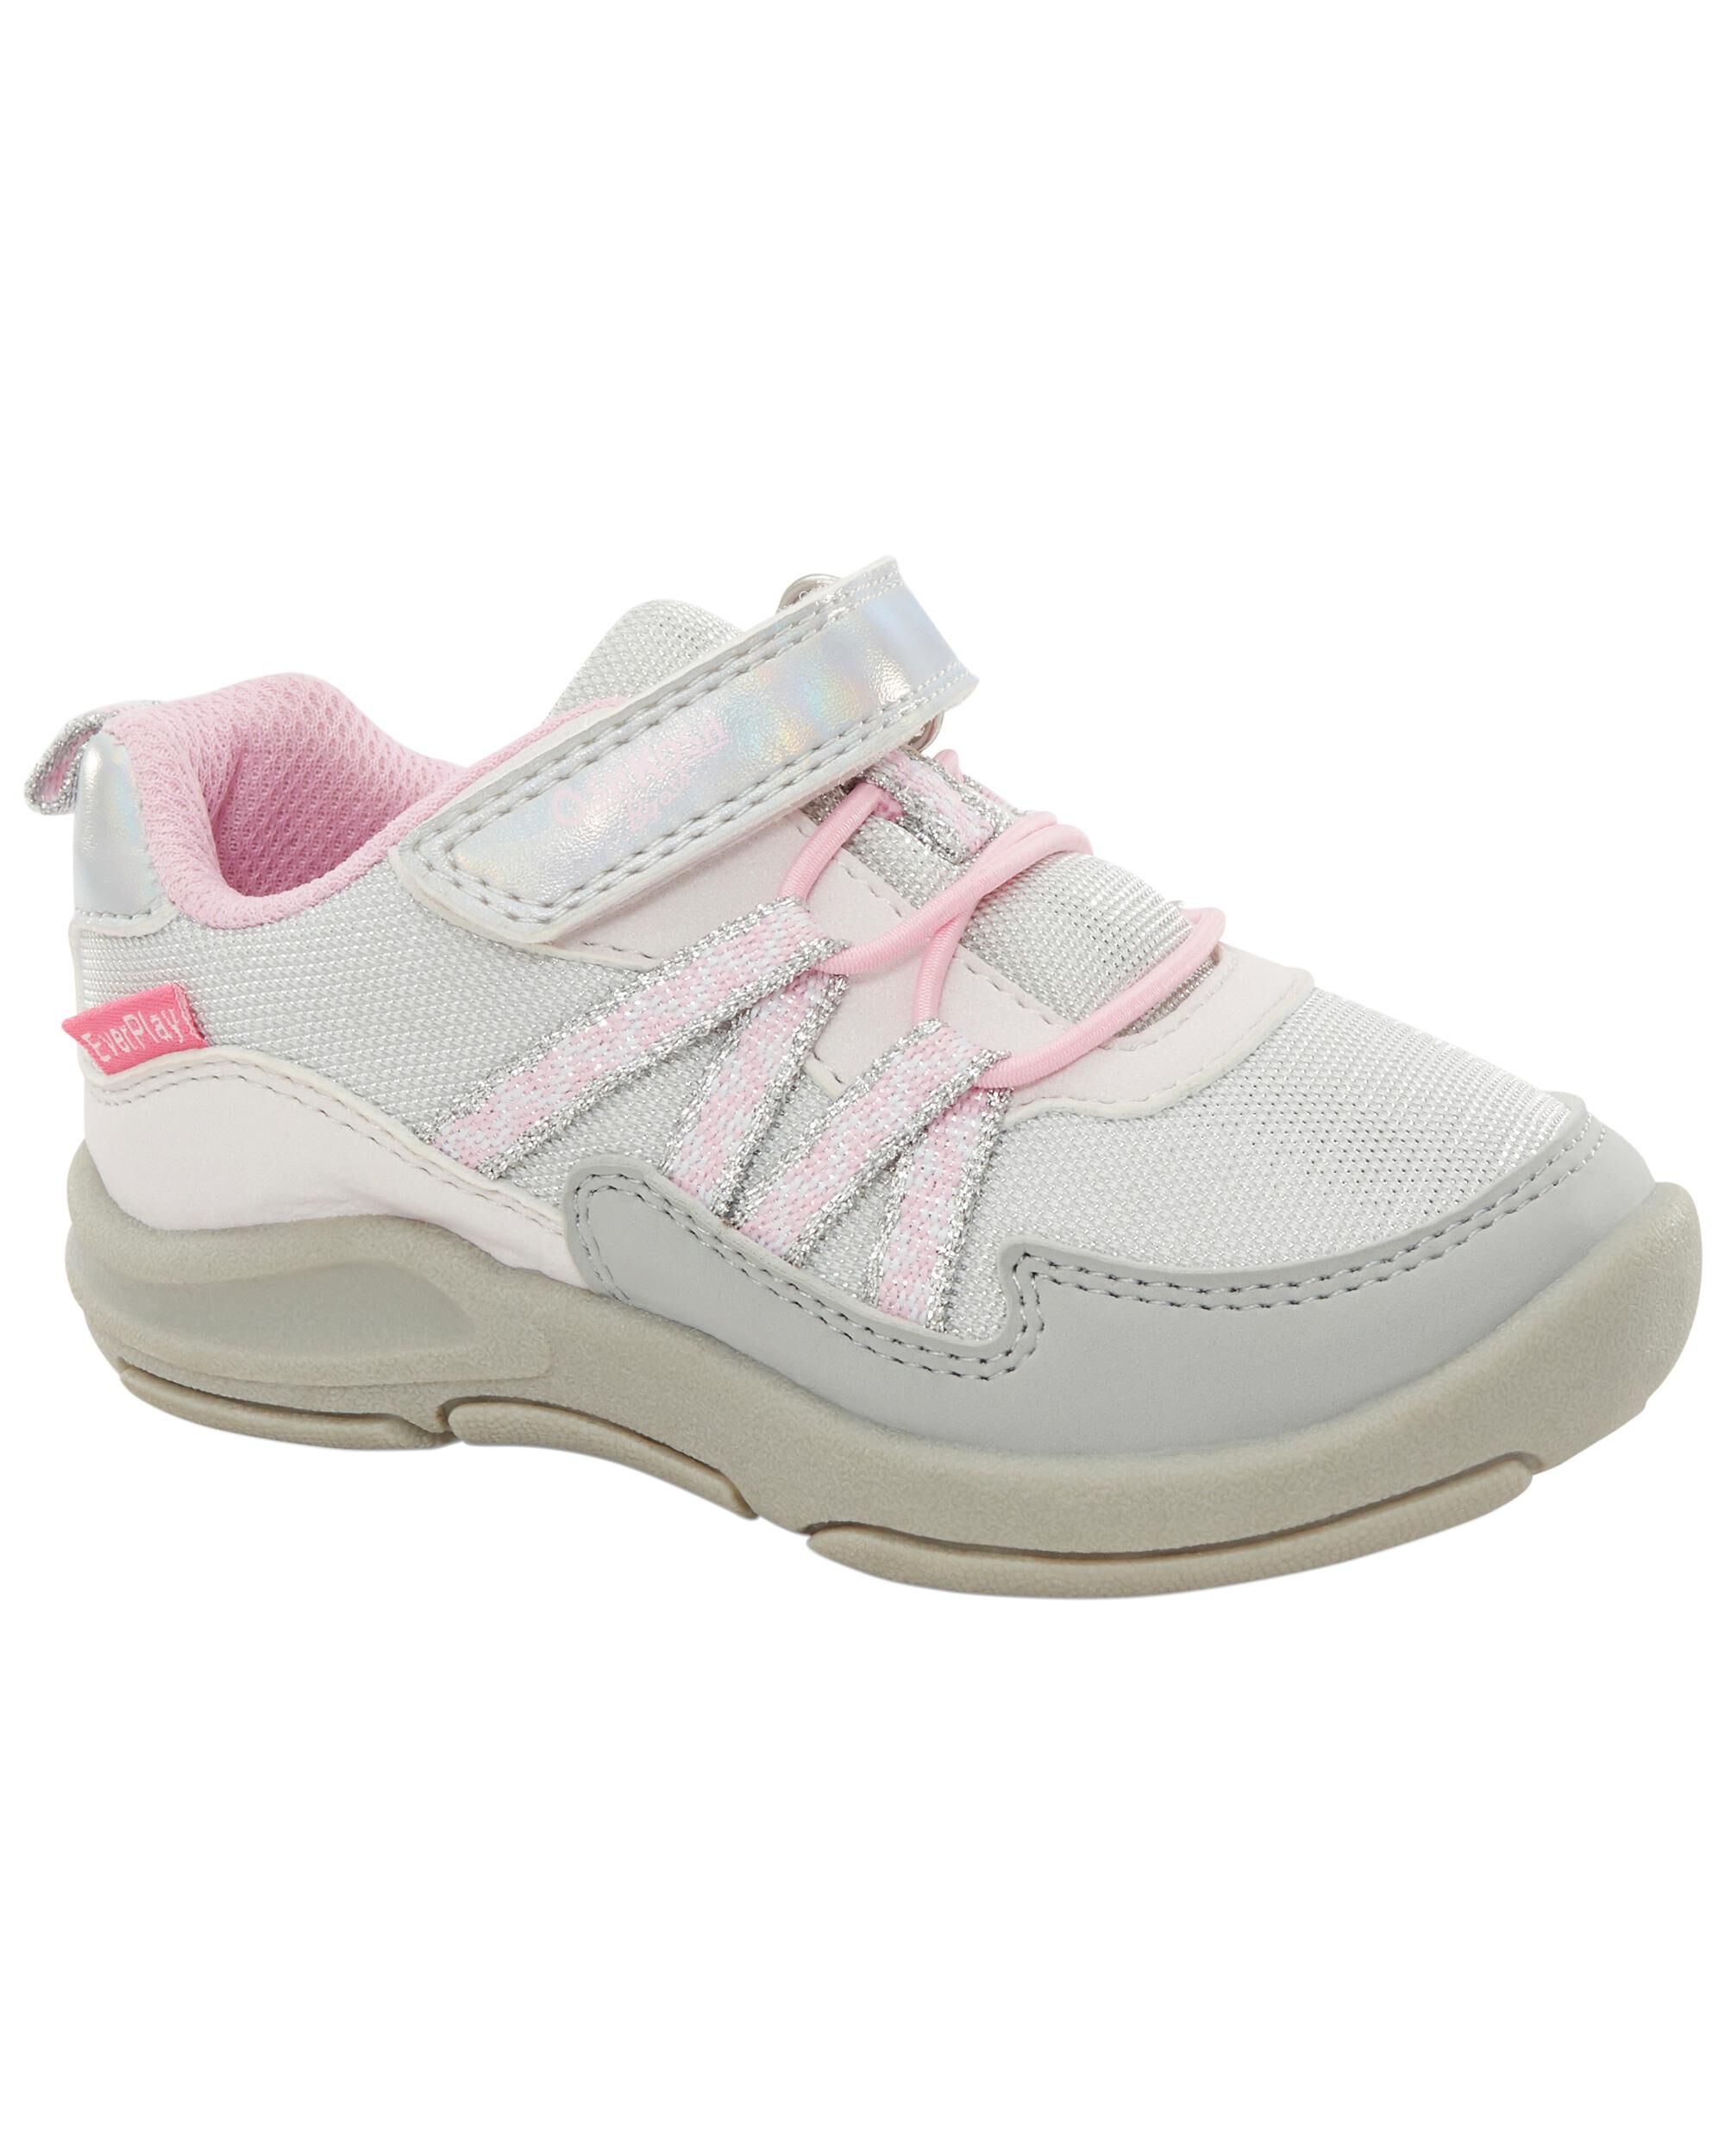 SZ  5,6,7,8,10,11 Toddler Young Girl Genuine Oshkosh Shoes Slip On  NEW 